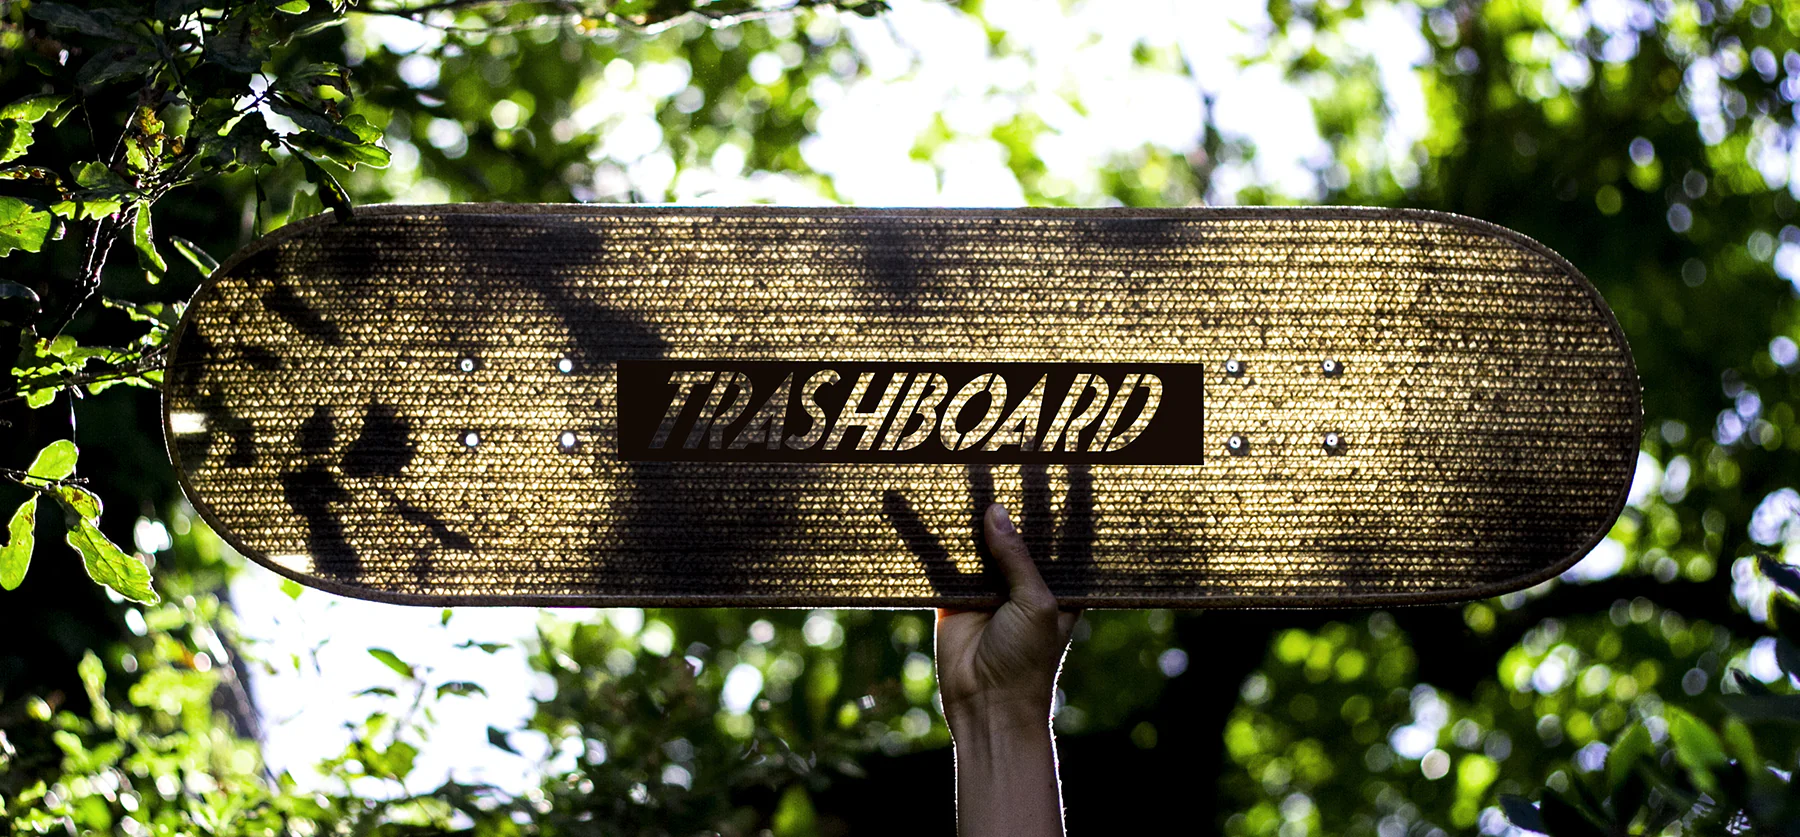 Trashboard Skate Board, Photo Credit: Trashboard.fr